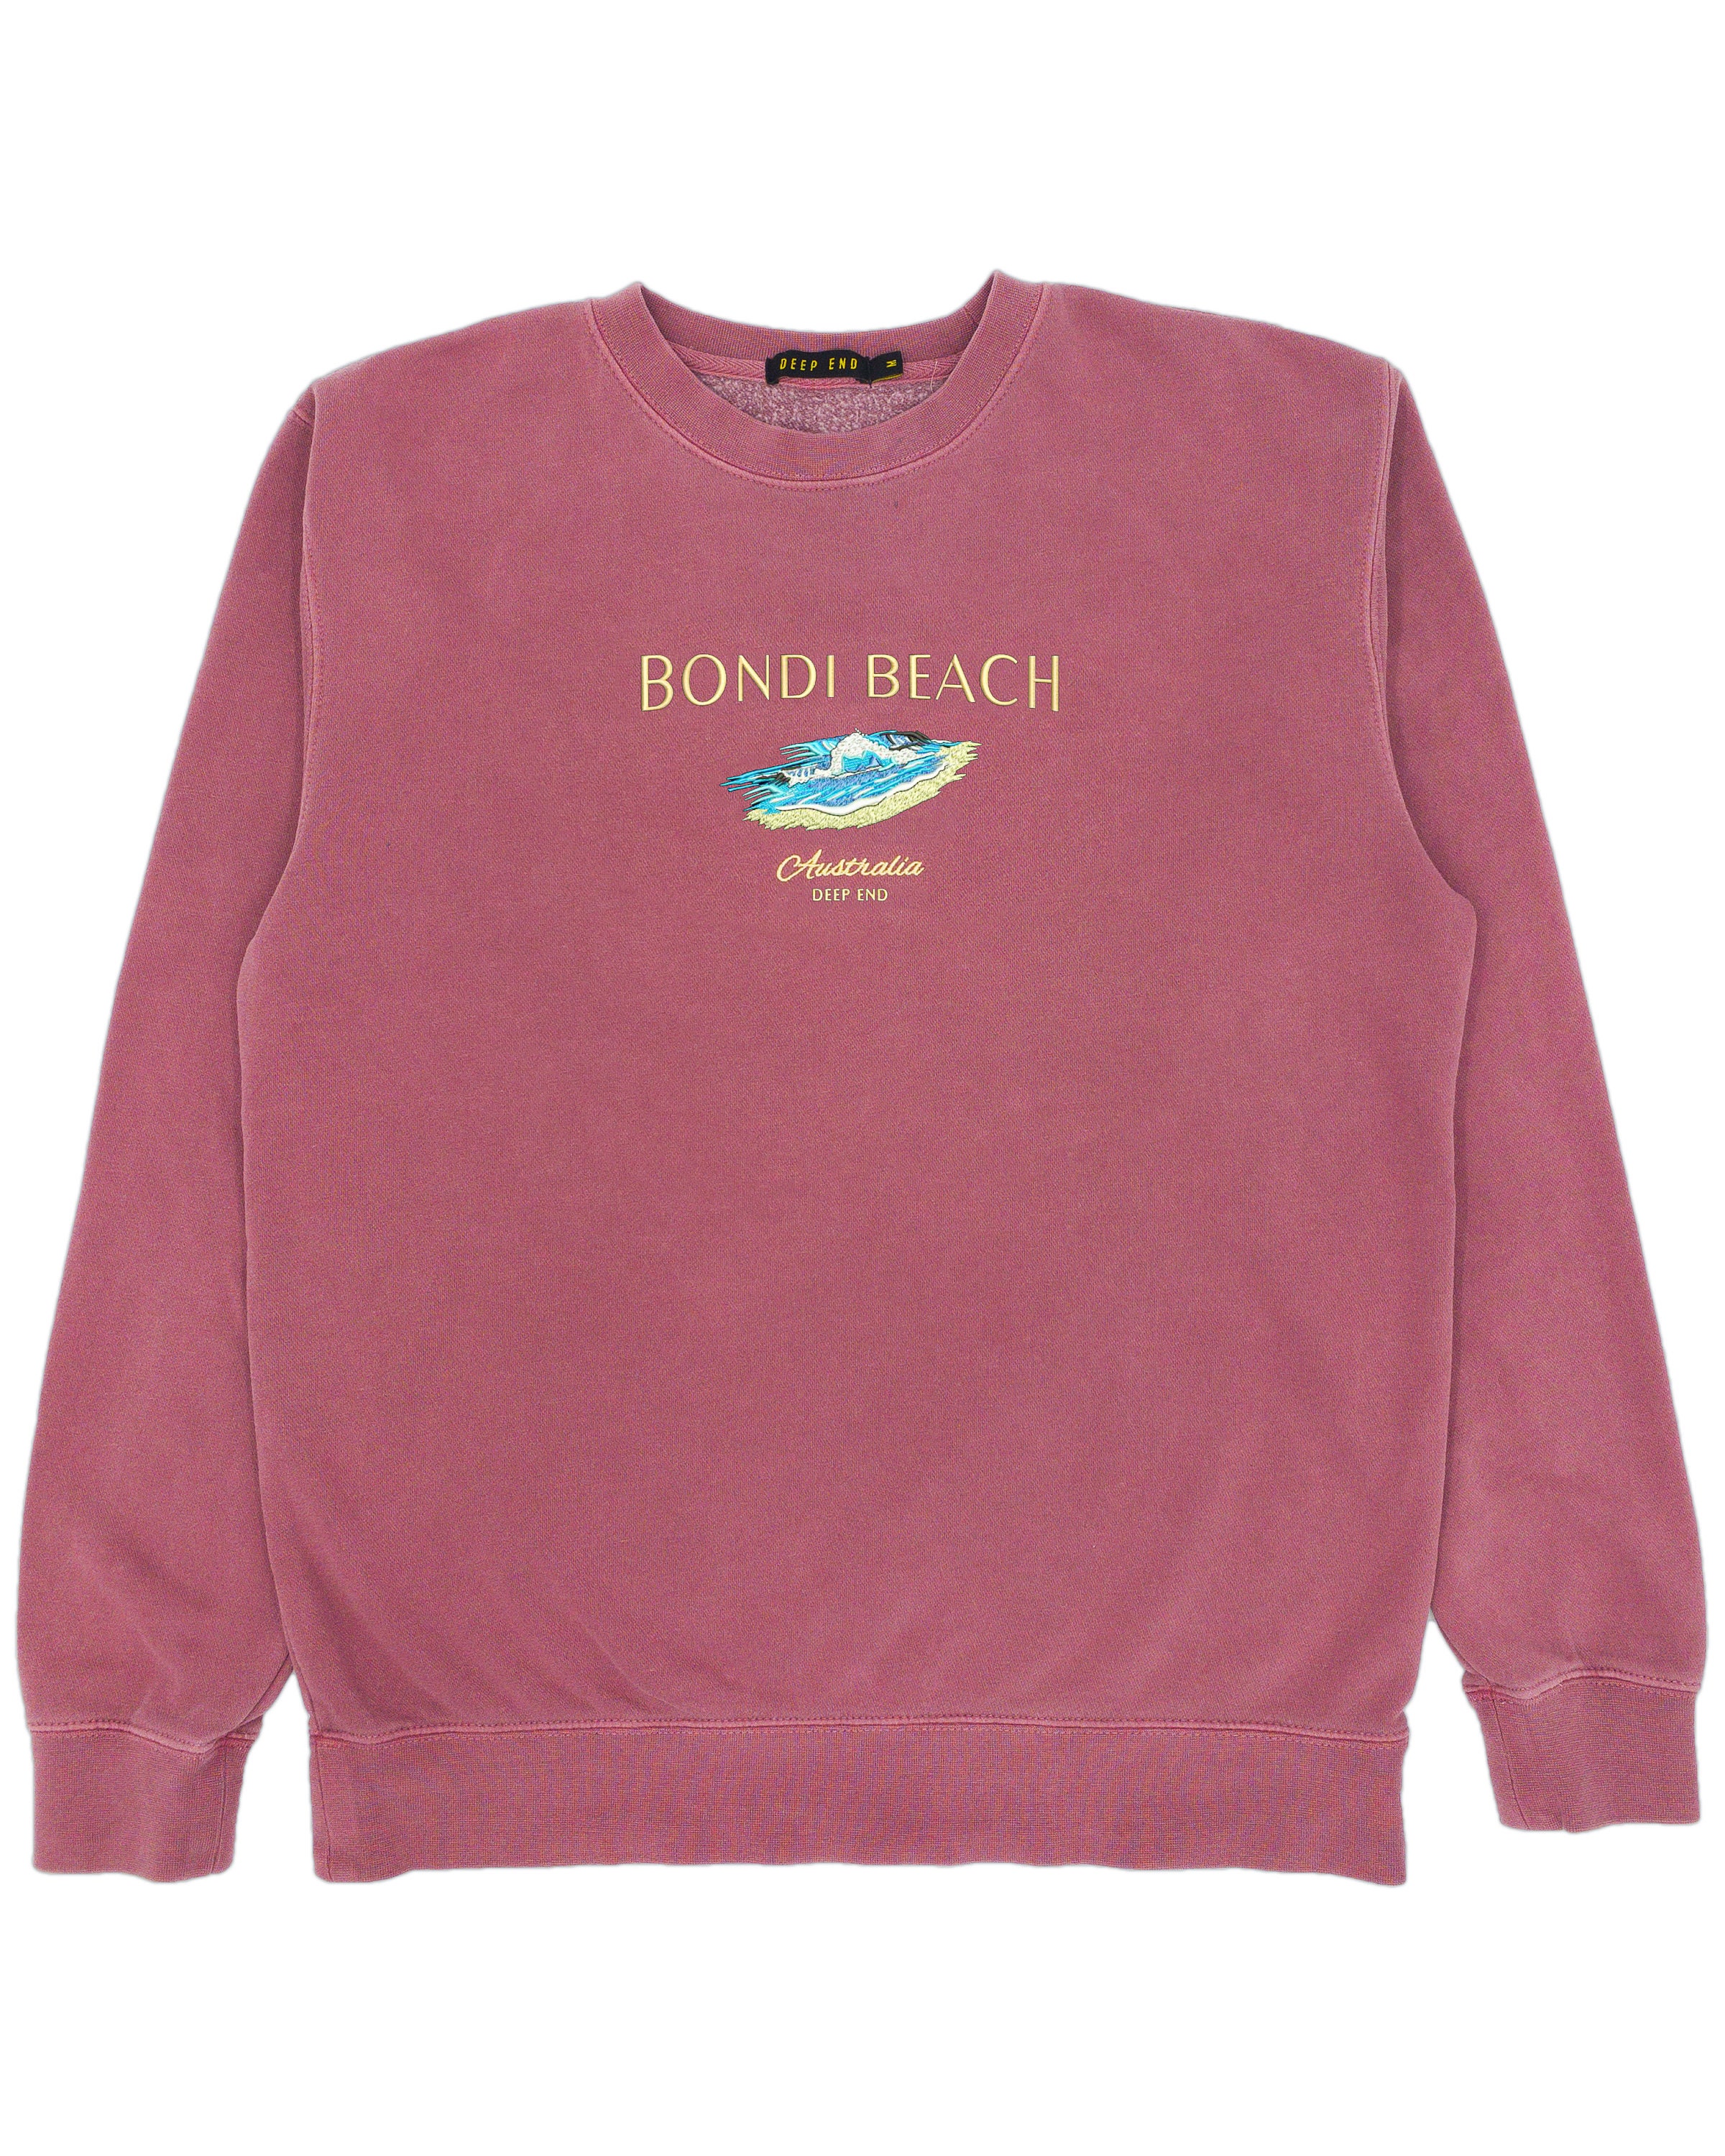 Bondi Beach Vintage Wash Unisex Crew Neck Sweatshirt | Etsy